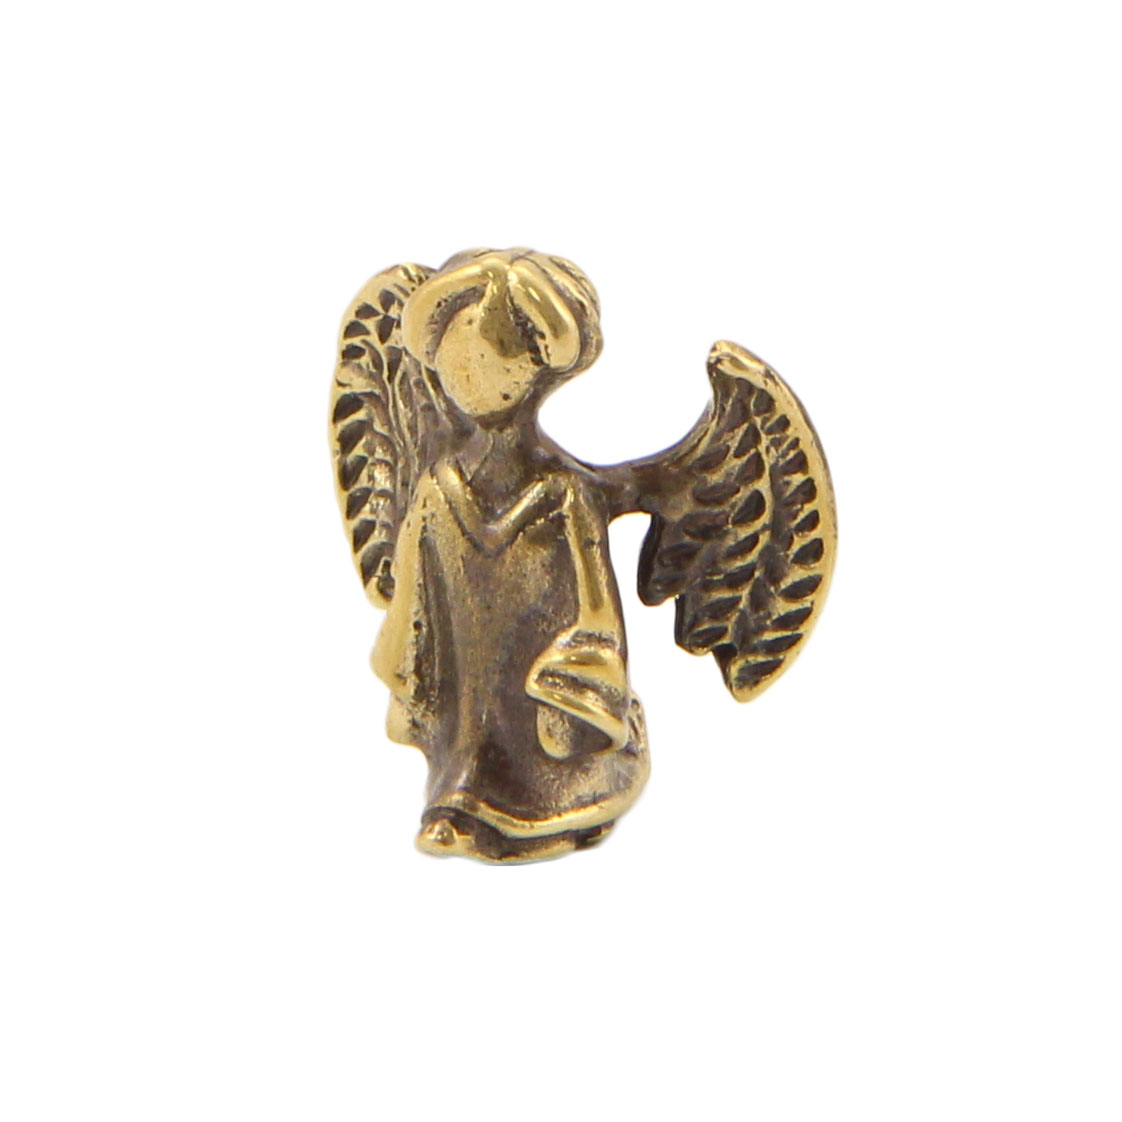 Бронзовый сувенир Ангел безликий малыйФото 15455-01.jpg